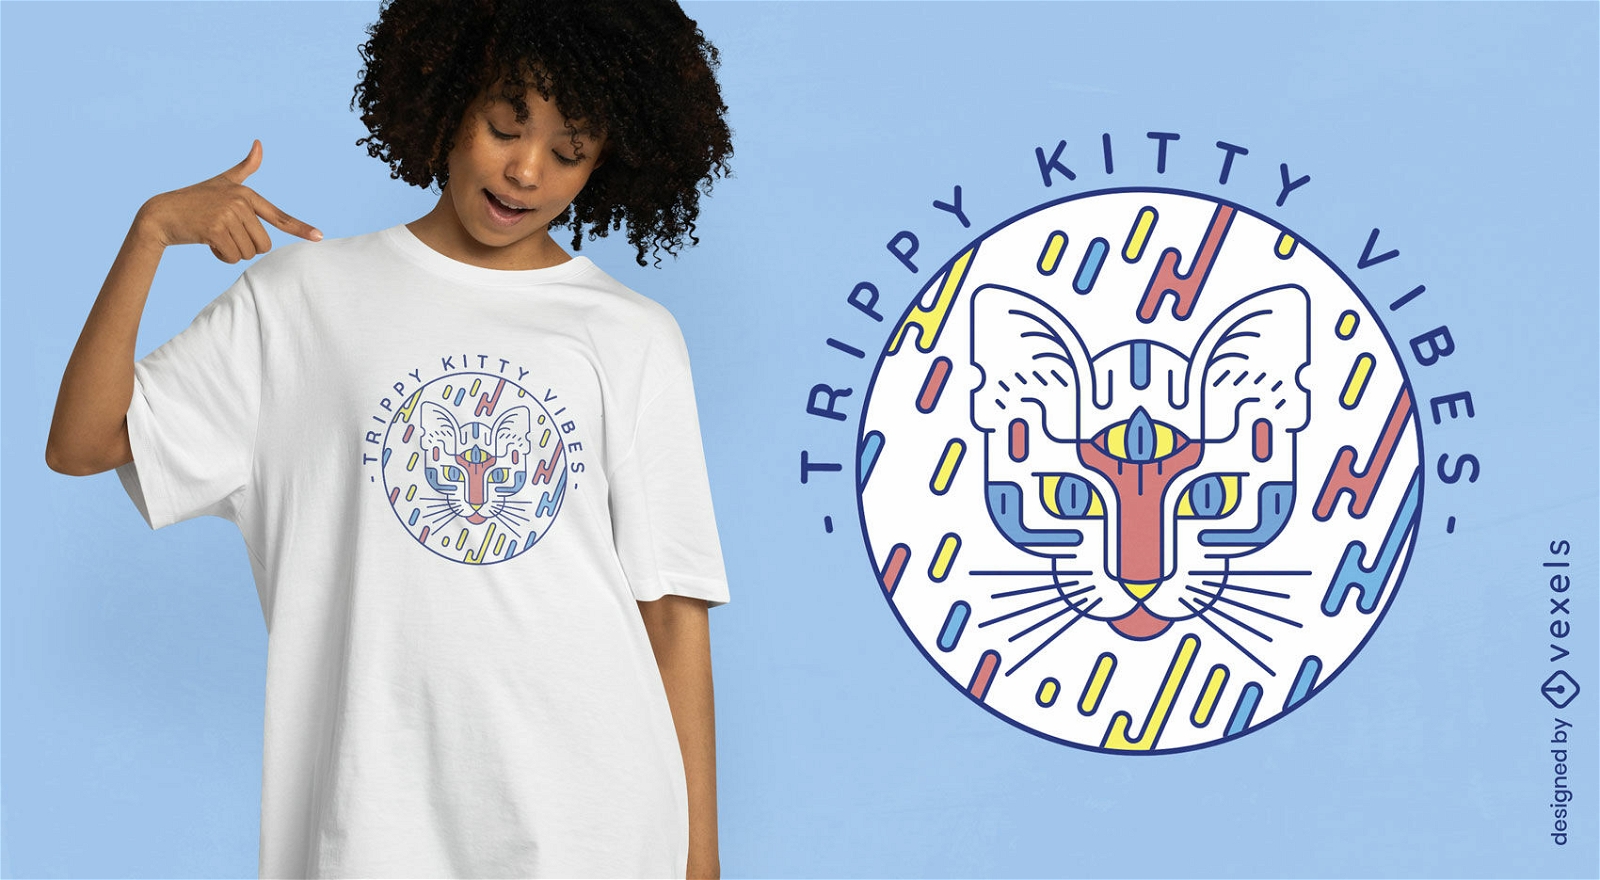 Trippy kitty vibes t-shirt design